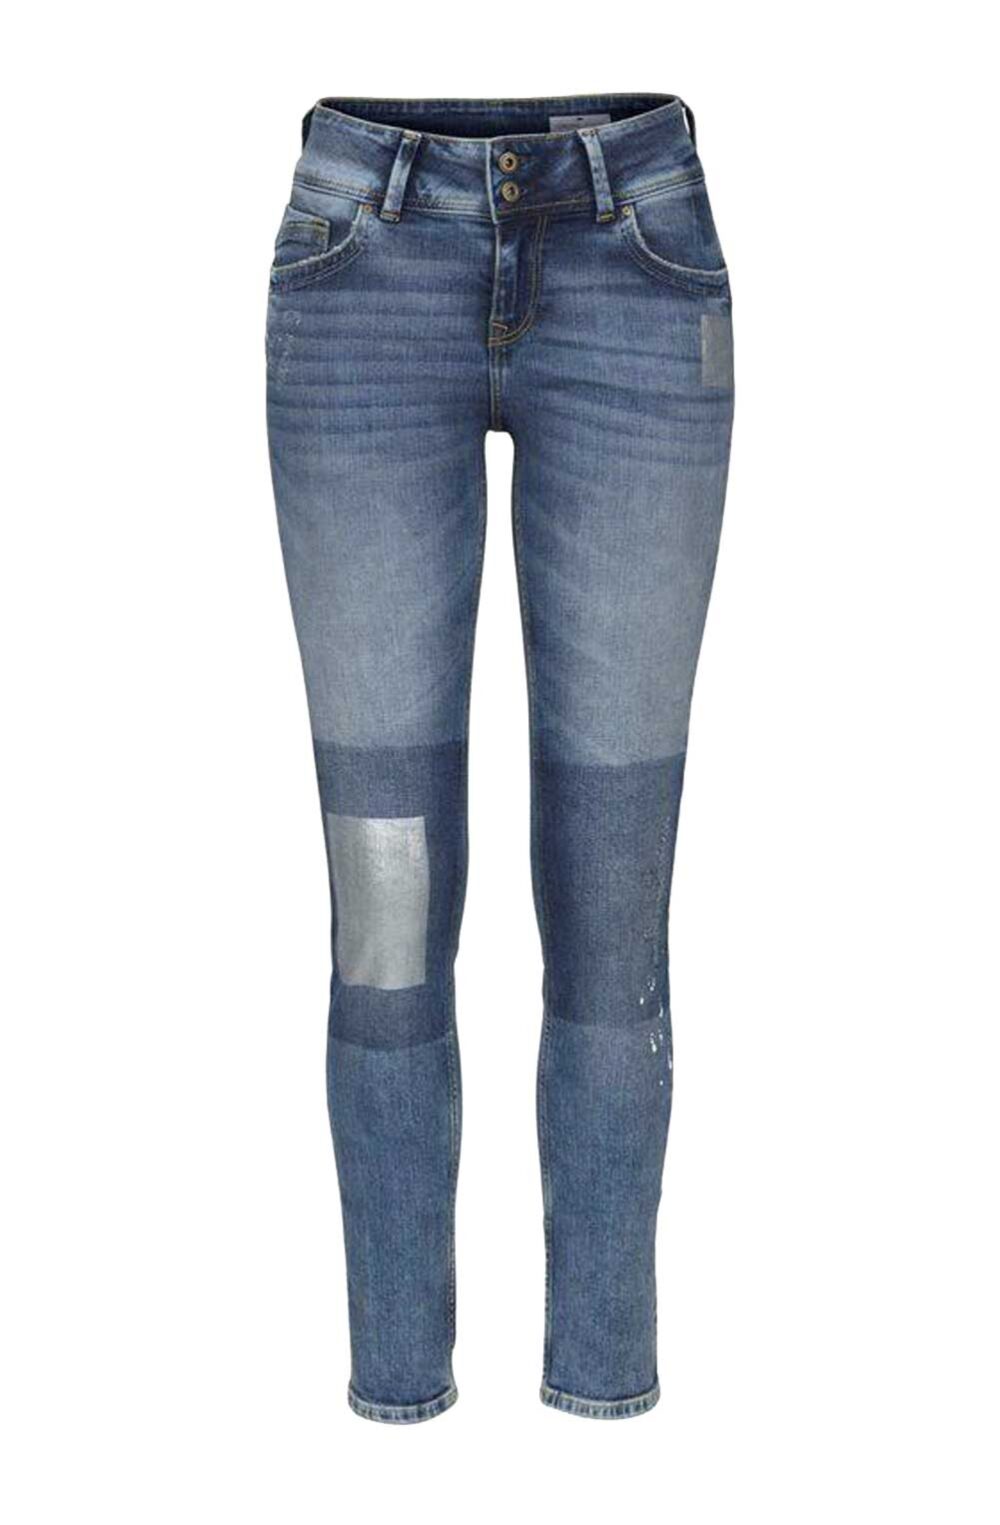 CROSS Damen Jeans Hose Denim Stretch Länge 30 used Röhre Skinny Missforty Online kaufen